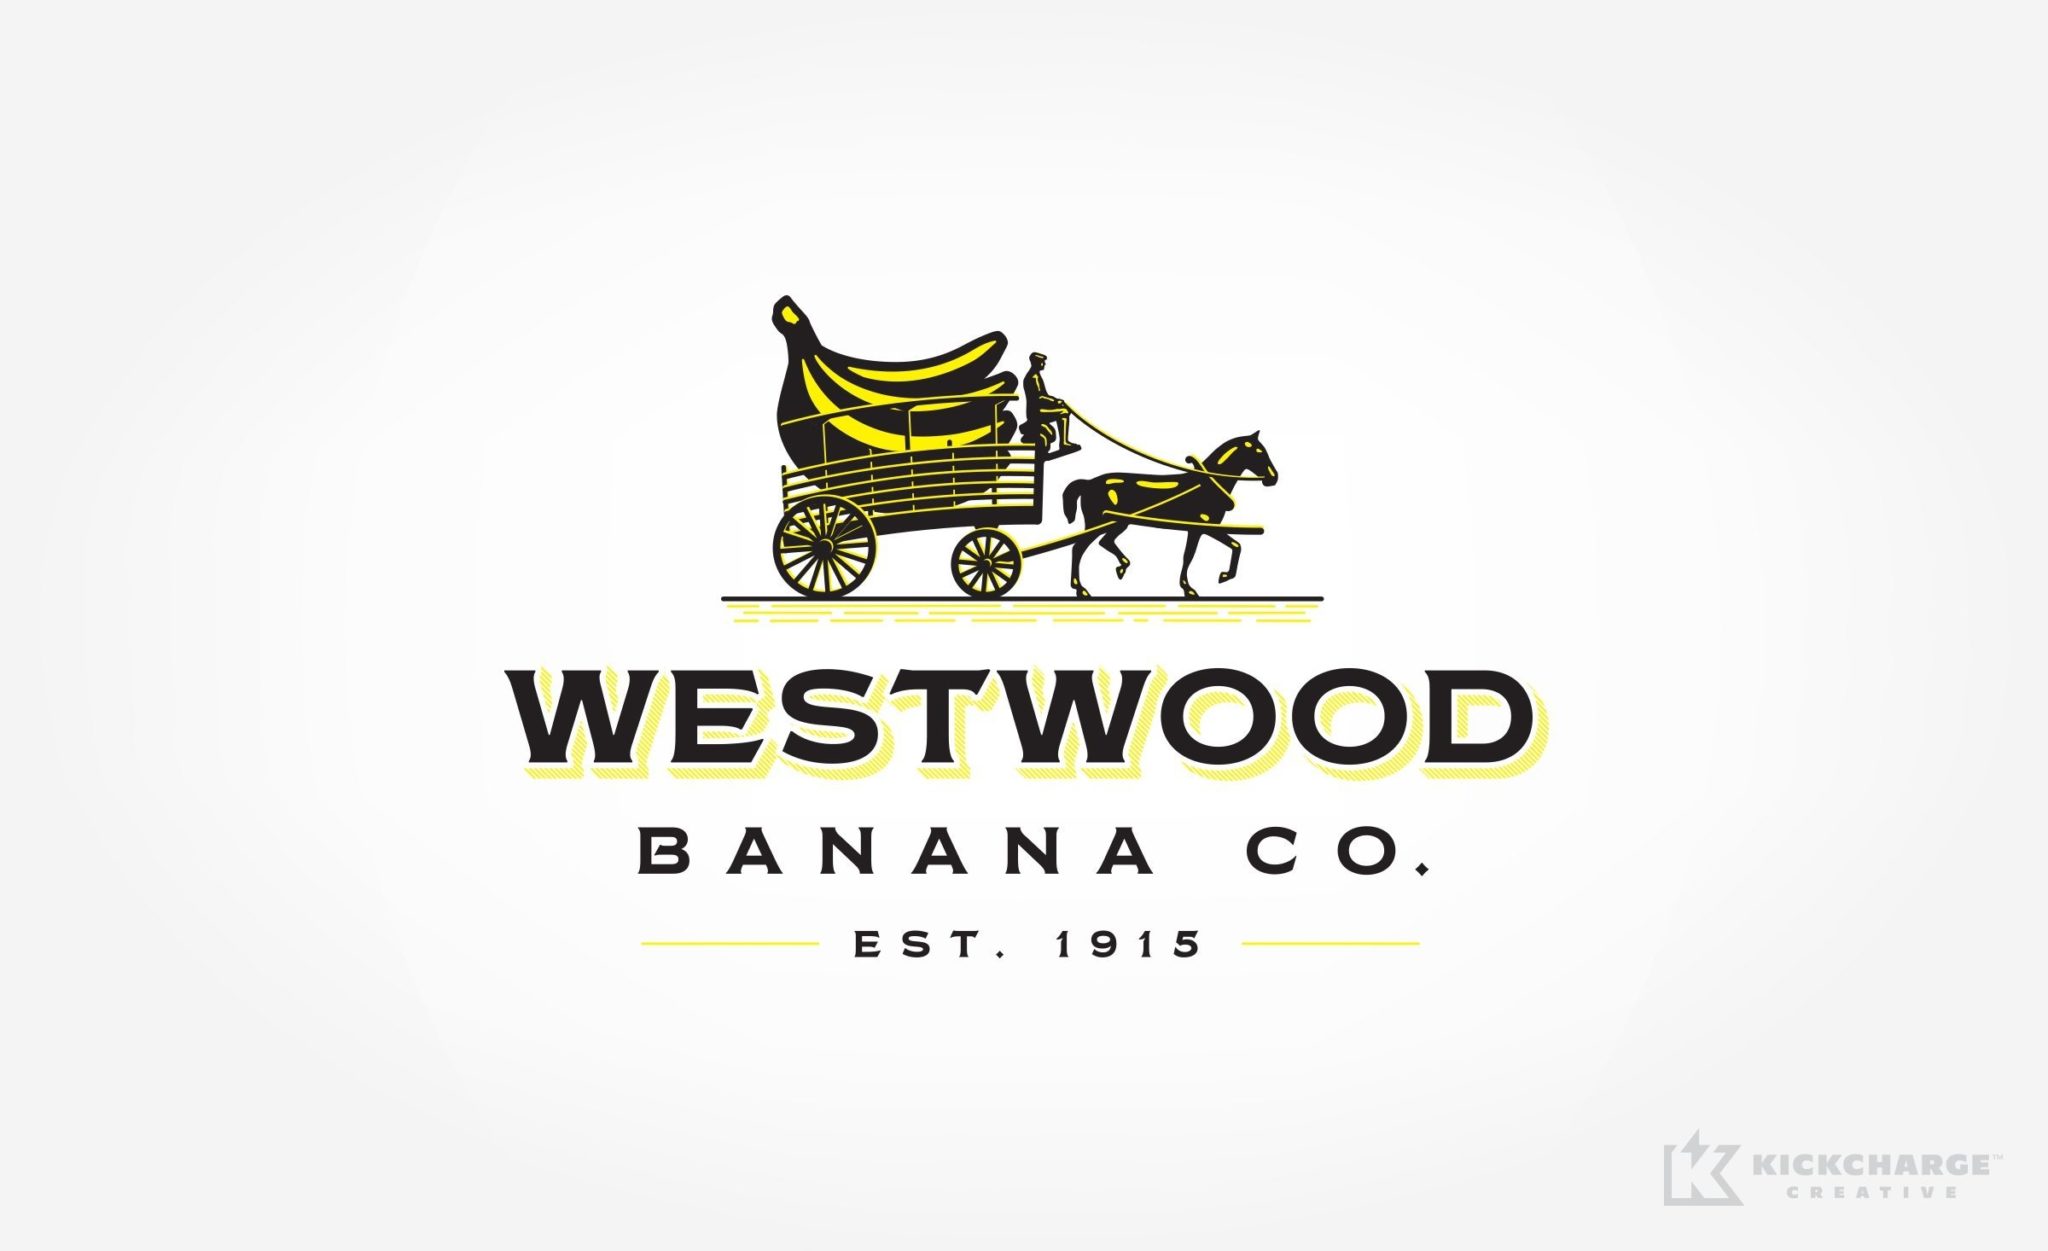 Westwood Banana Co.